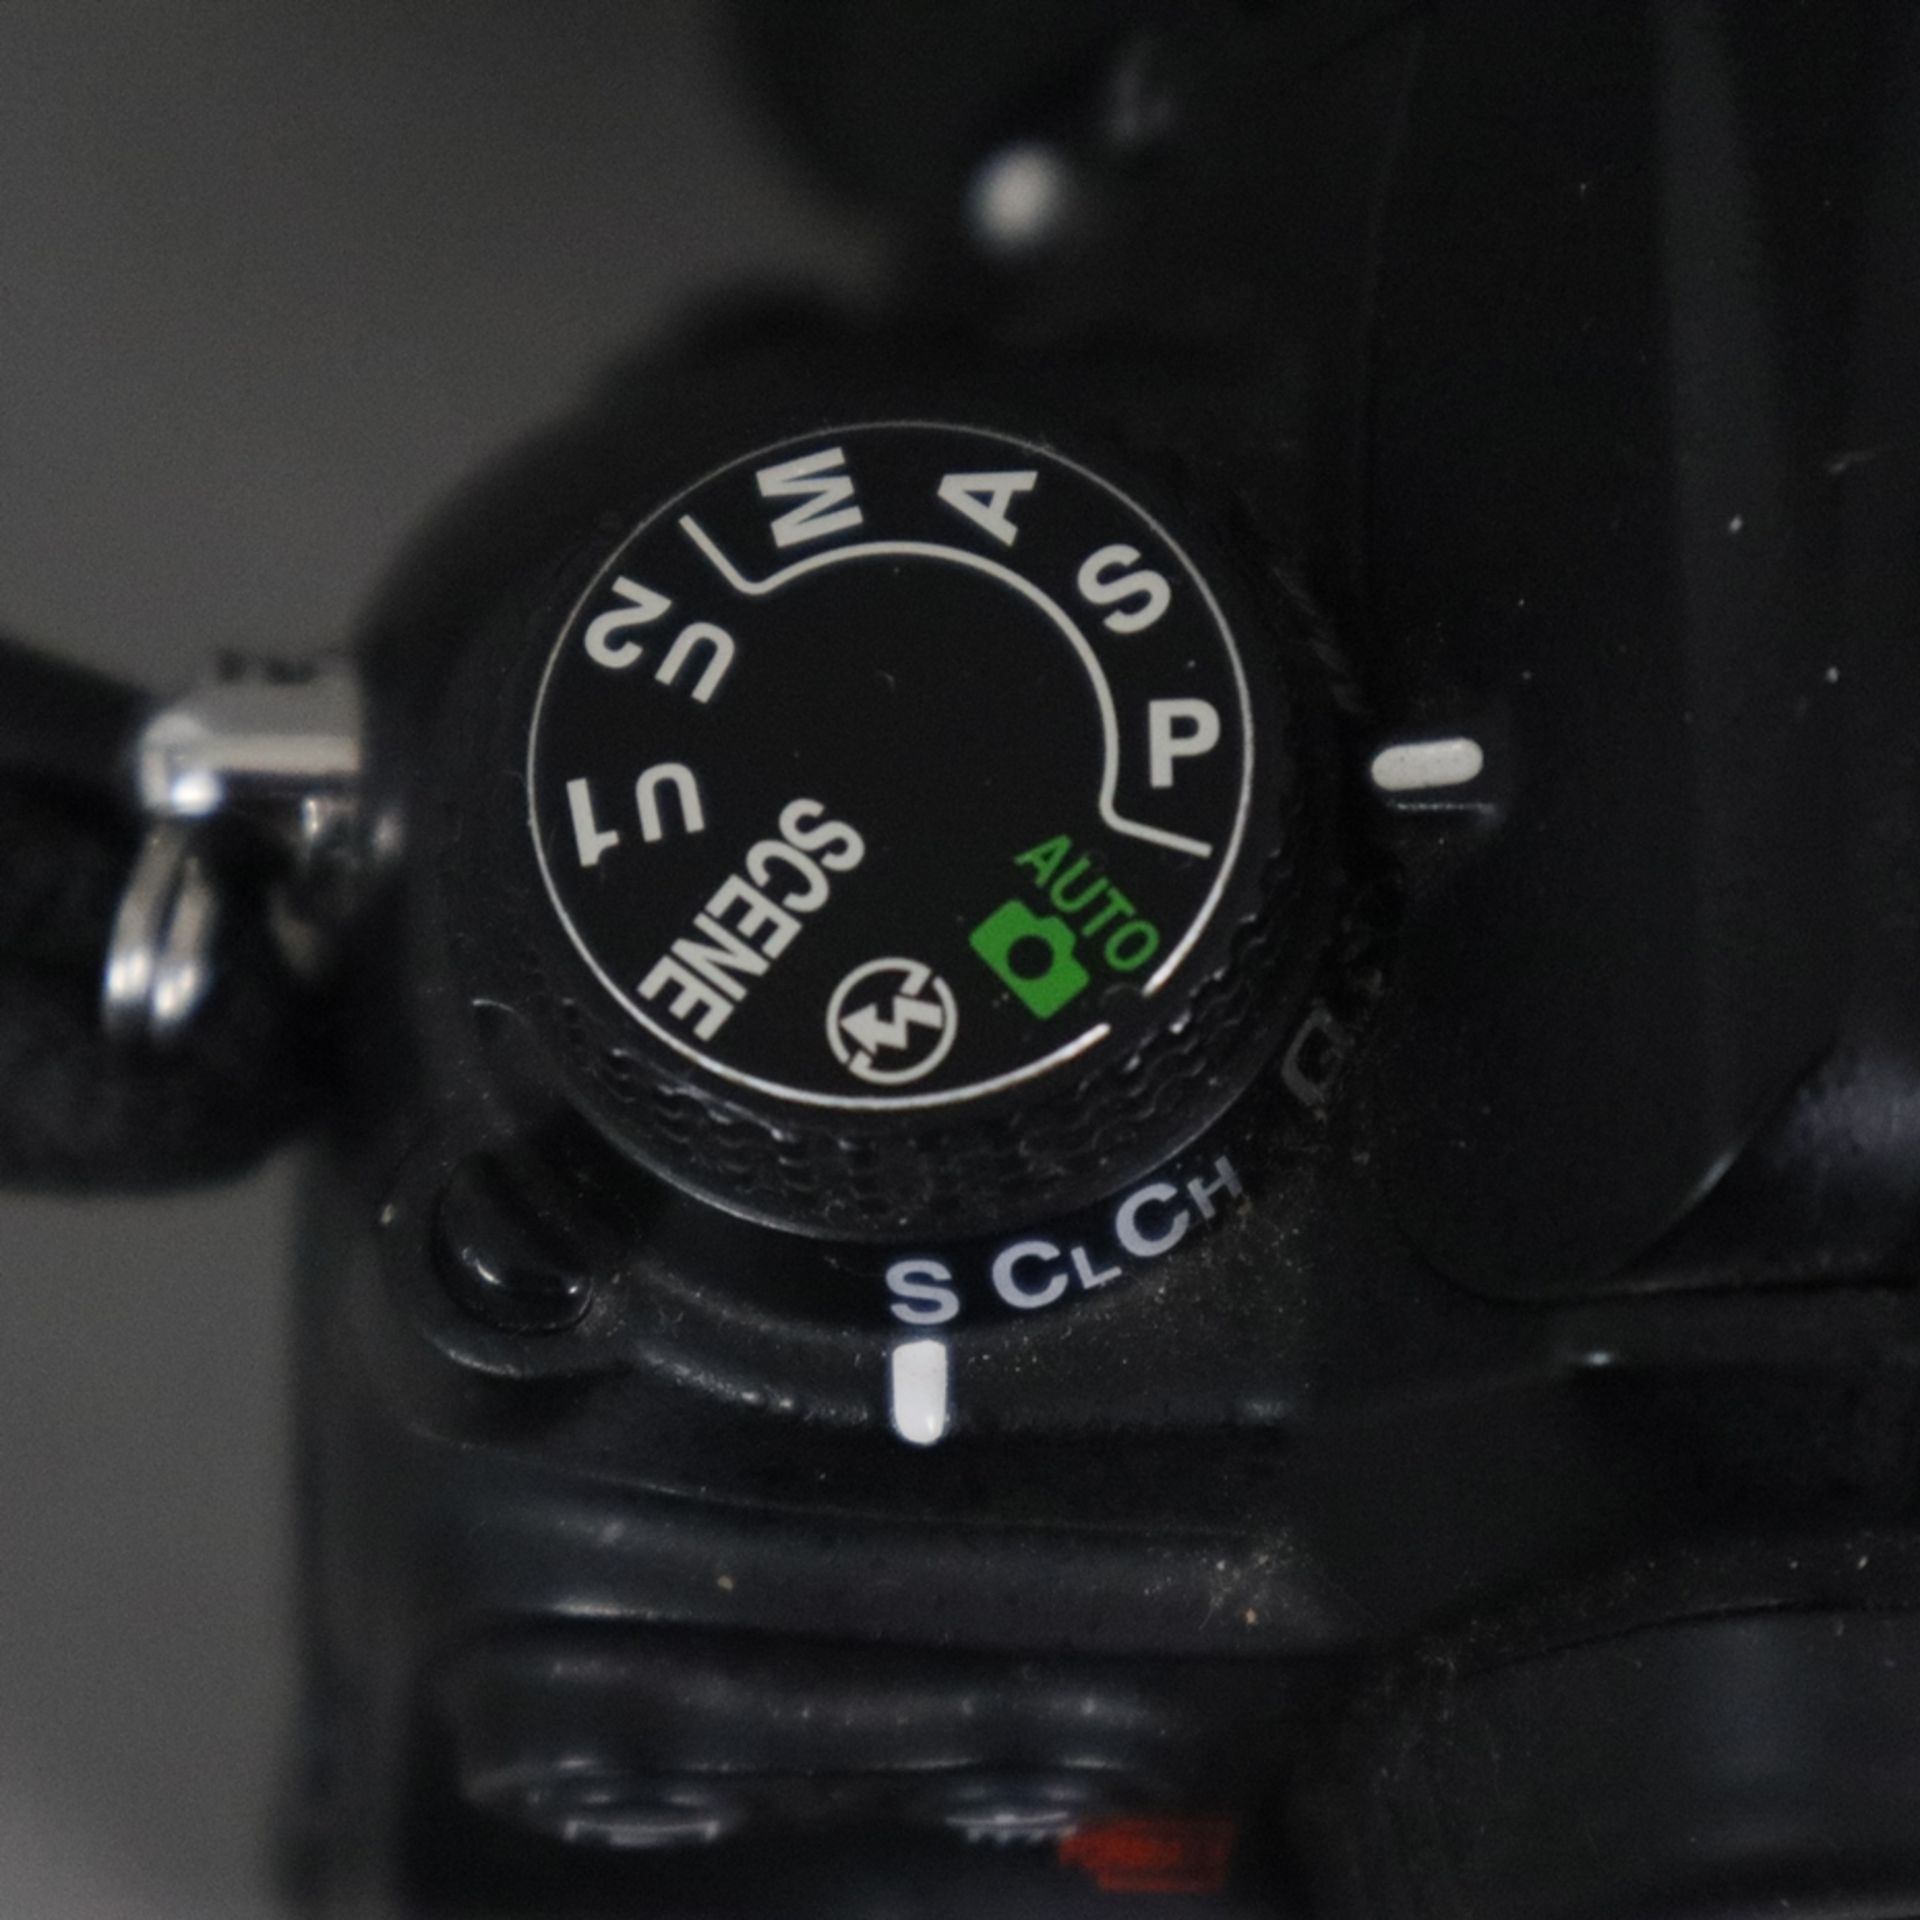 Nikon D7000 SLR-Digitalkamera - 16 Megapixel, 39 AF-Punkte, LiveView, Full-HD-Video, mit Objektiven - Bild 6 aus 11